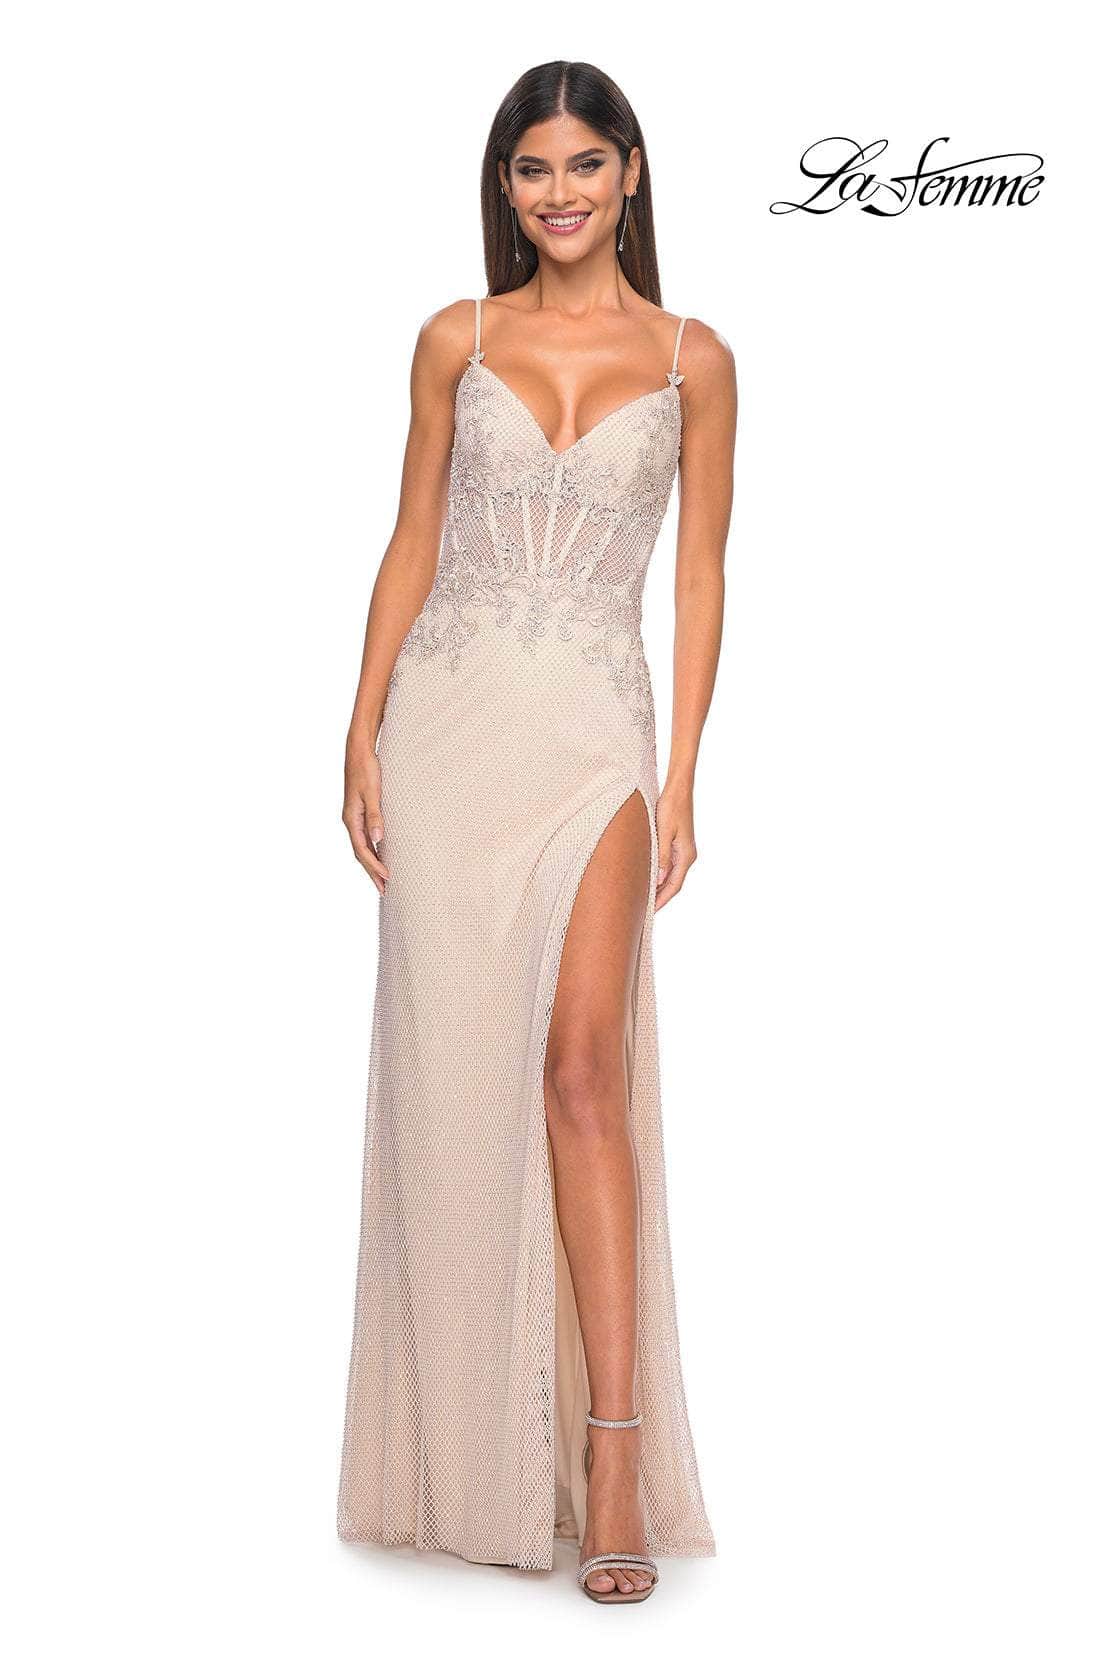 La Femme 32292 - Deep V-Neck Sheer Corset Prom Gown
